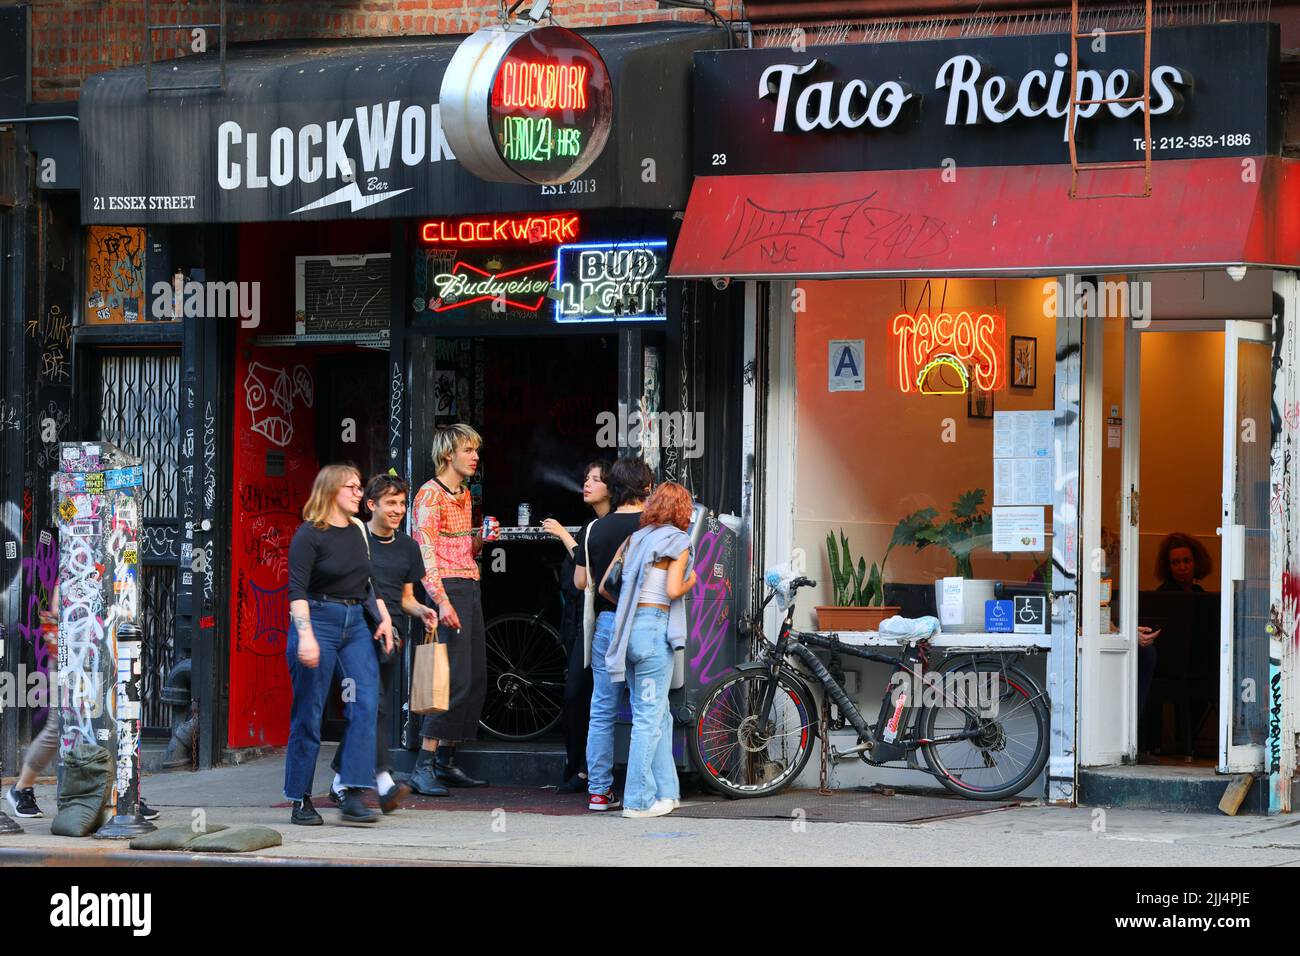 Clockwork Bar, 21 Essex St; Taco Recipes, 23 Essex St, New York, NY. Zoomers, Generation Z vor einer Bar in Manhattans Lower East Side. Stockfoto